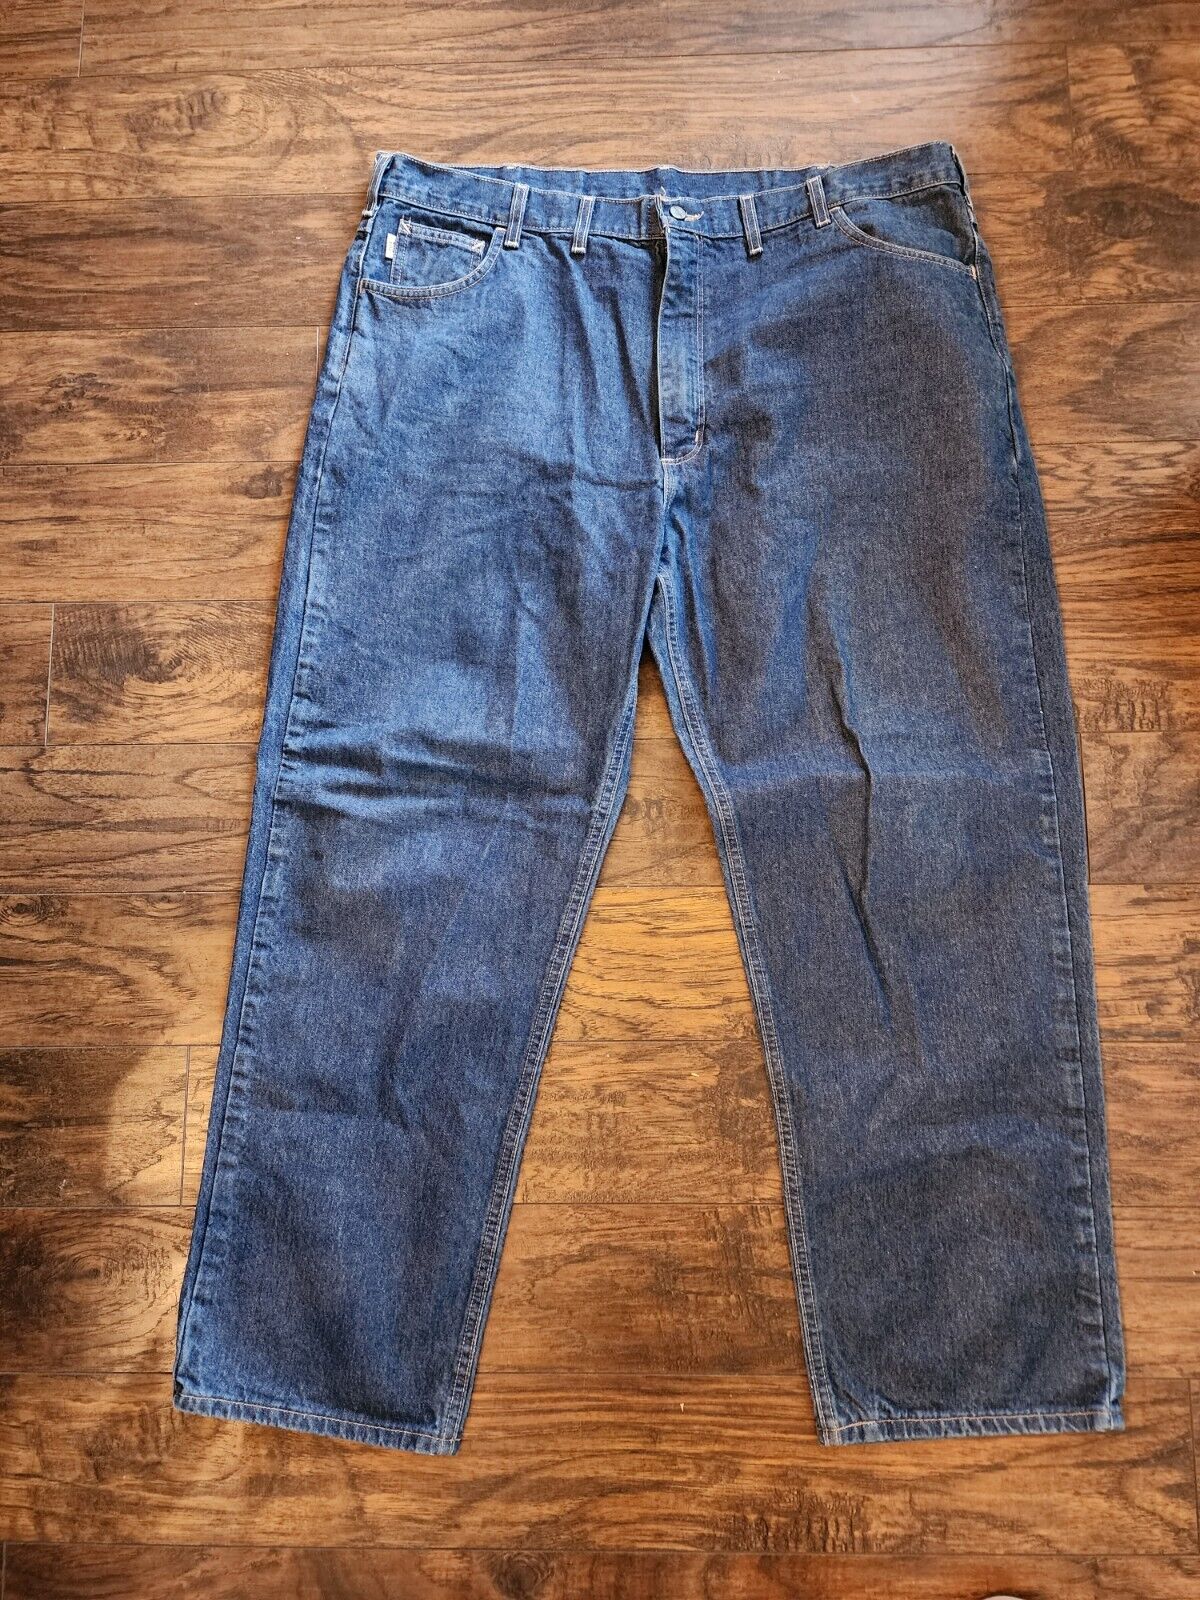 Carhartt Blue Jeans Pants HRC2 Flame Resistant si… - image 1